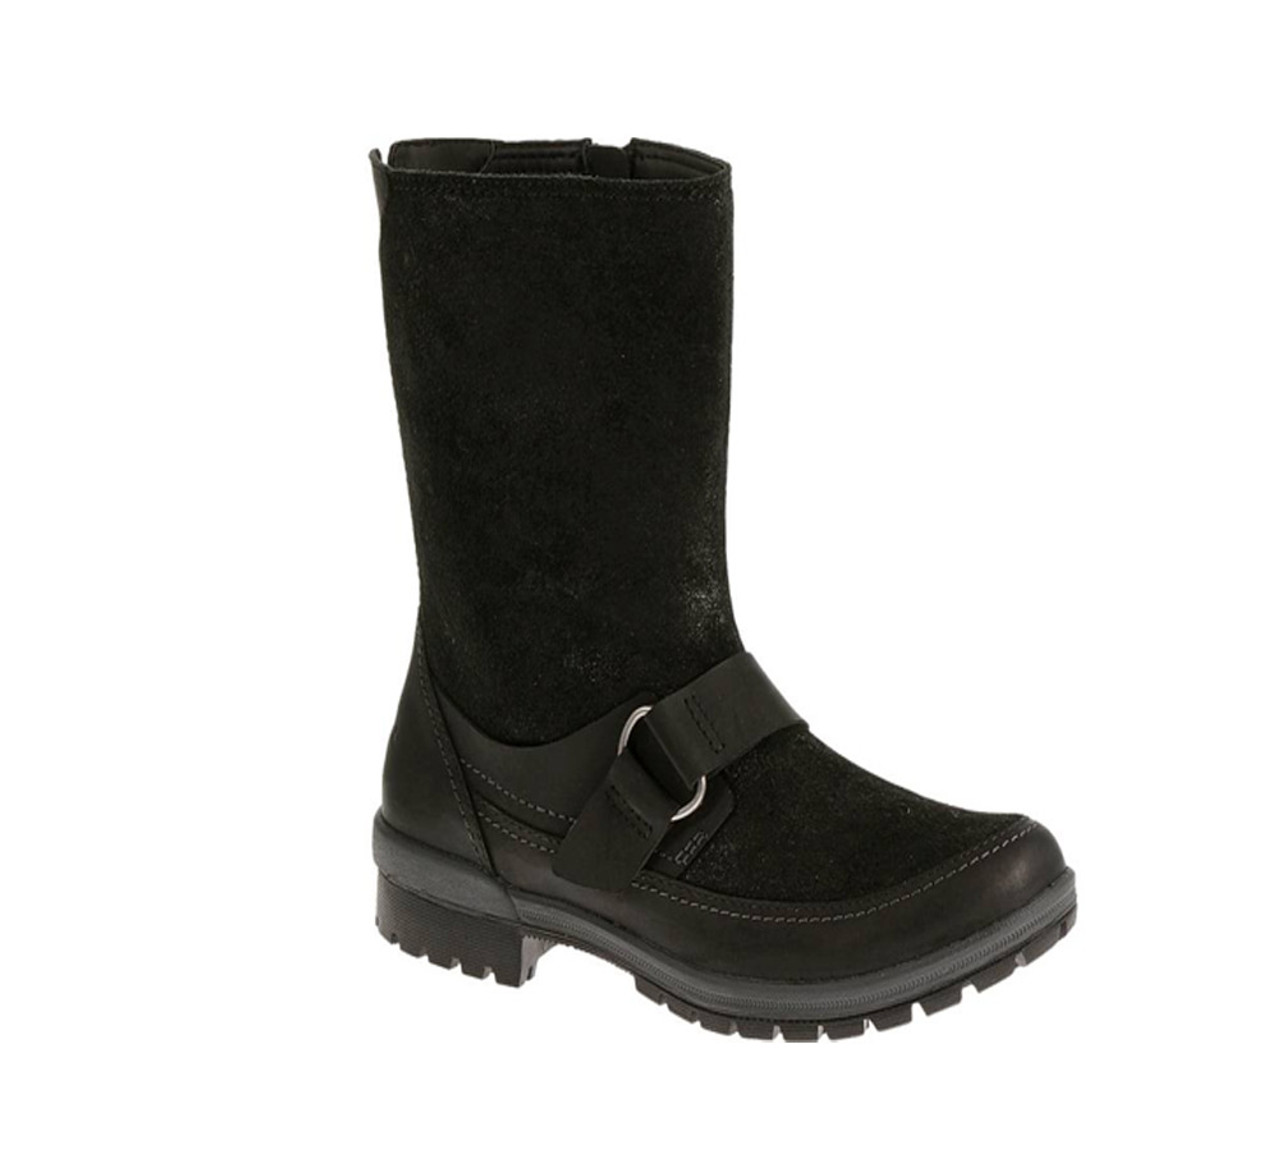 Merrell Women's Emery Buckle Winter Boot - Black | Discount Ladies Boots & More - Shoolu.com | Shoolu.com